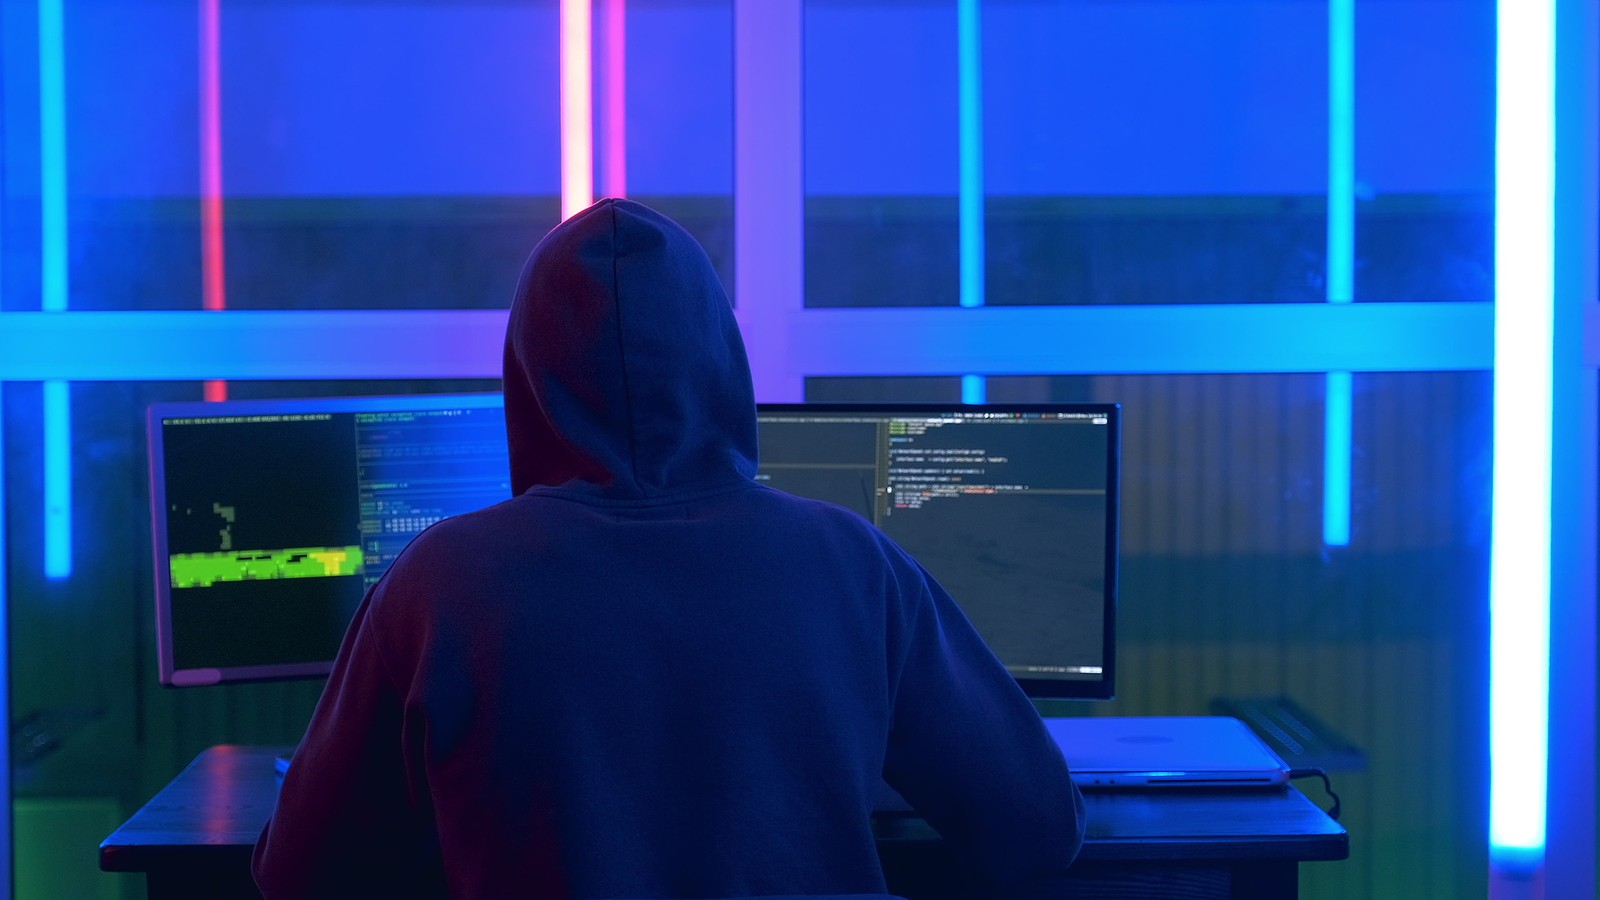 Back view of hacker in a black jacket